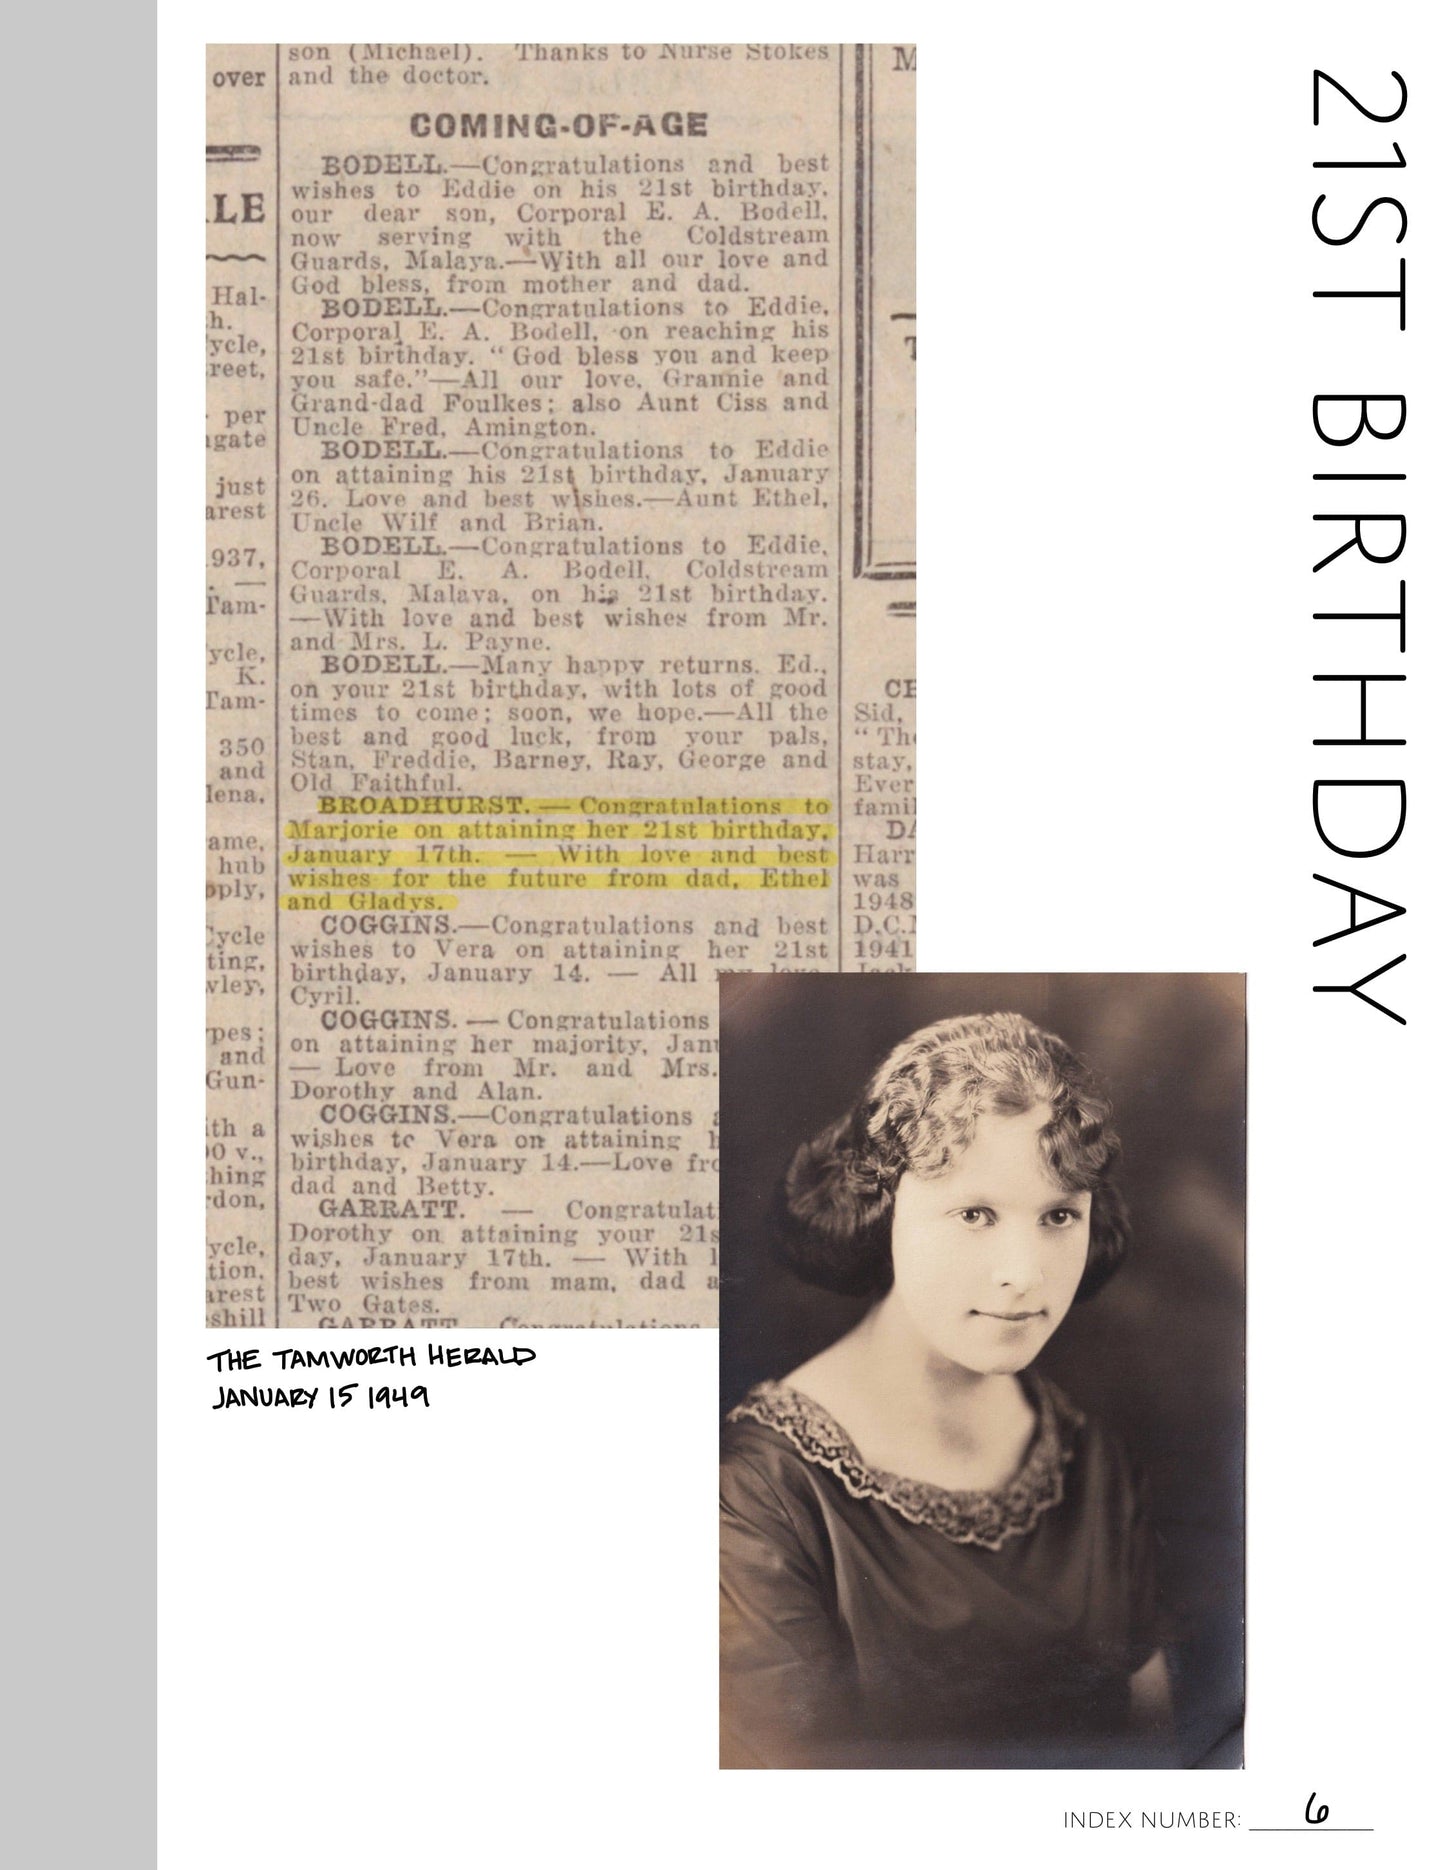 21st Birthday: Printable Genealogy Page (Digital Download)